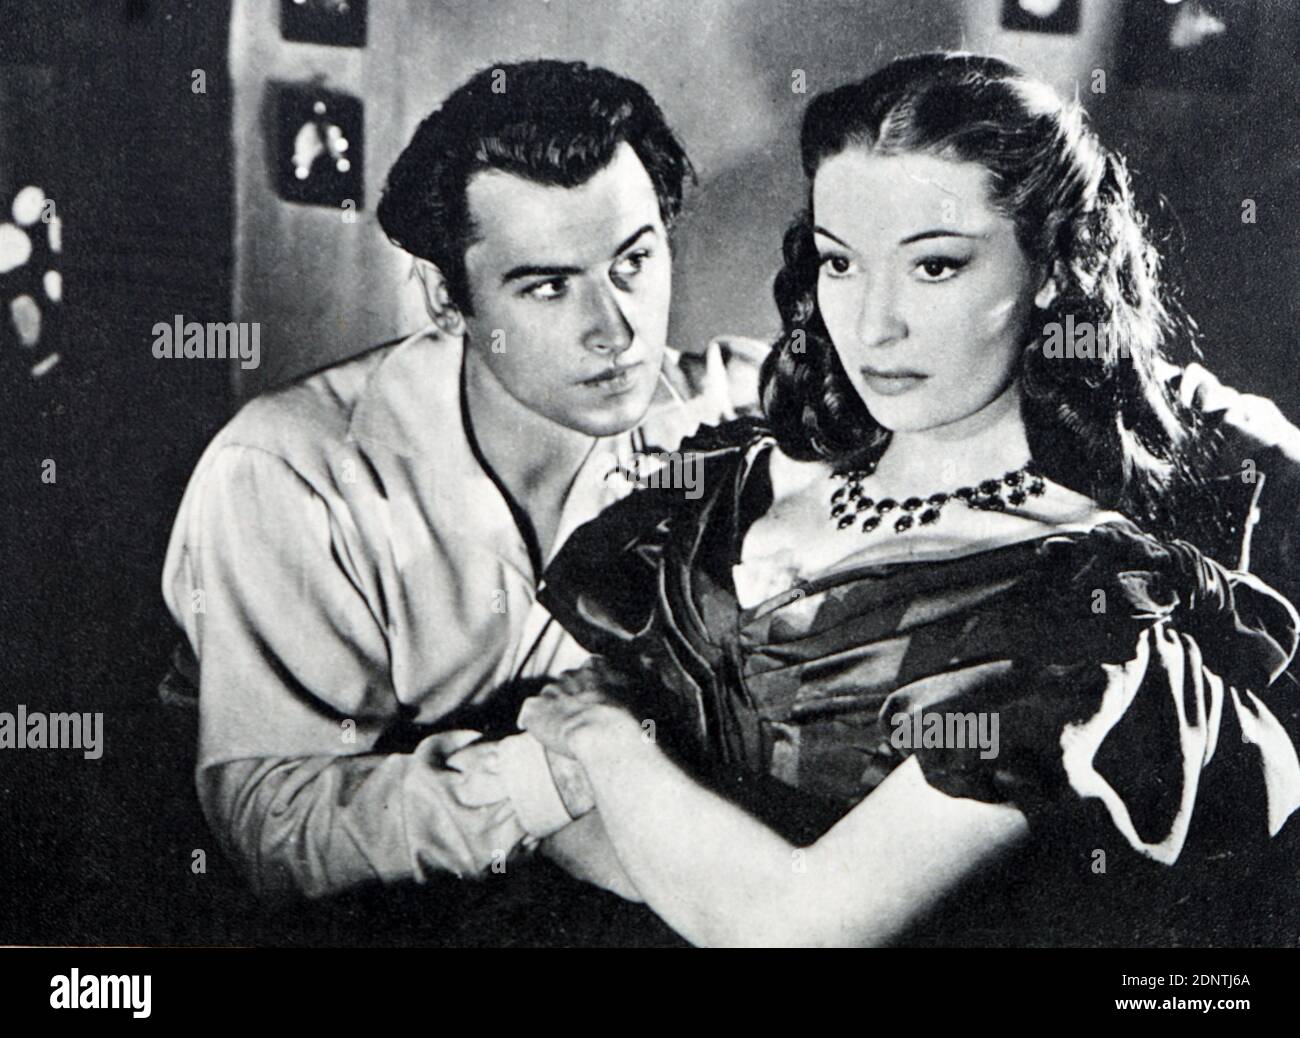 Film still from 'Blanche Fury' starring Stewart Granger, Valerie Hobson, Michael Gough, and Maurice Denham. Stock Photo